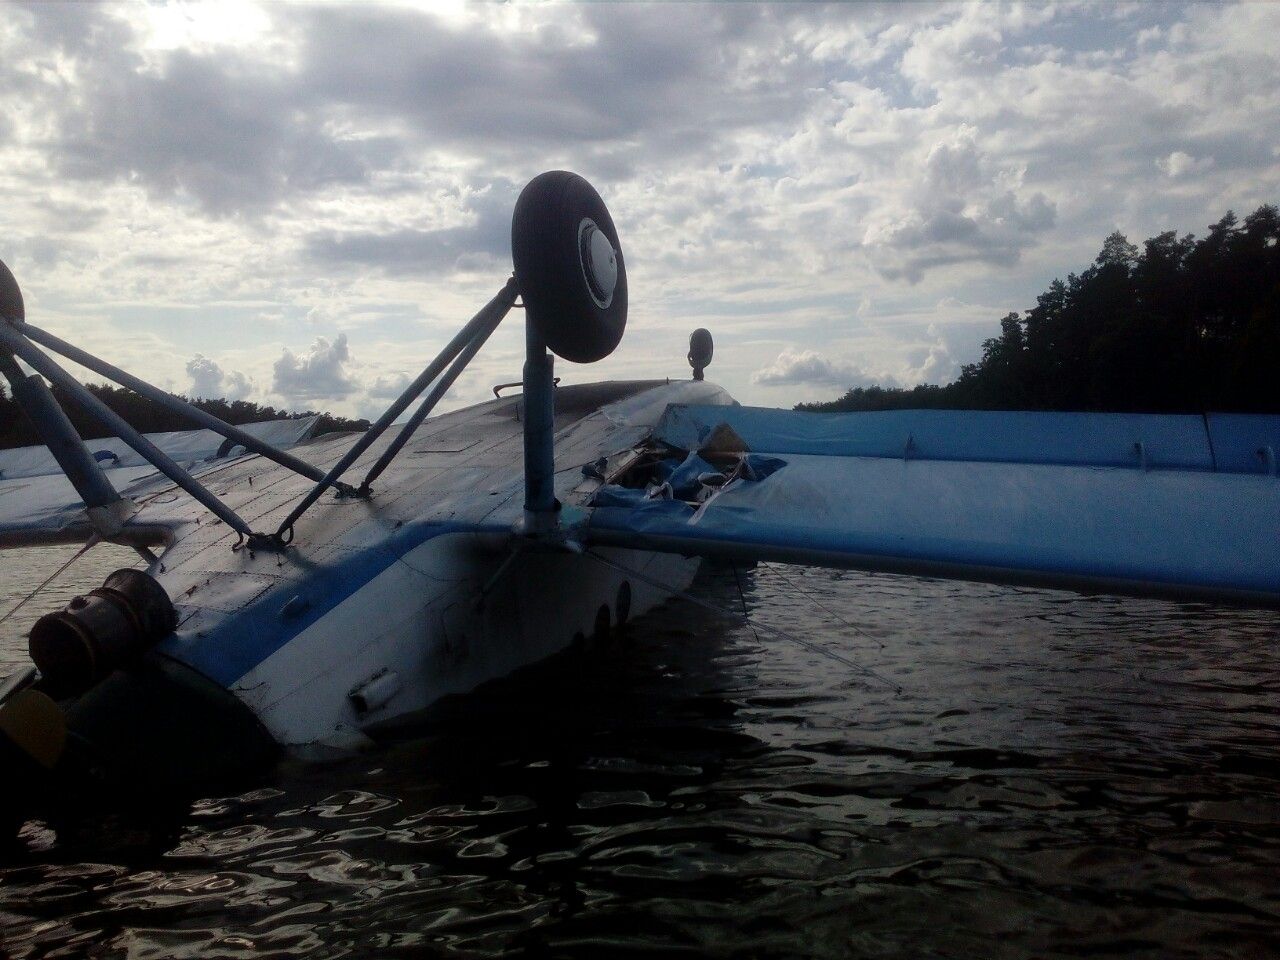 7 июня в Киеве в озеро рыбхоза "Нивки"упал самолет АН-2 с тремя людьми на борту / kyiv.dsns.gov.ua